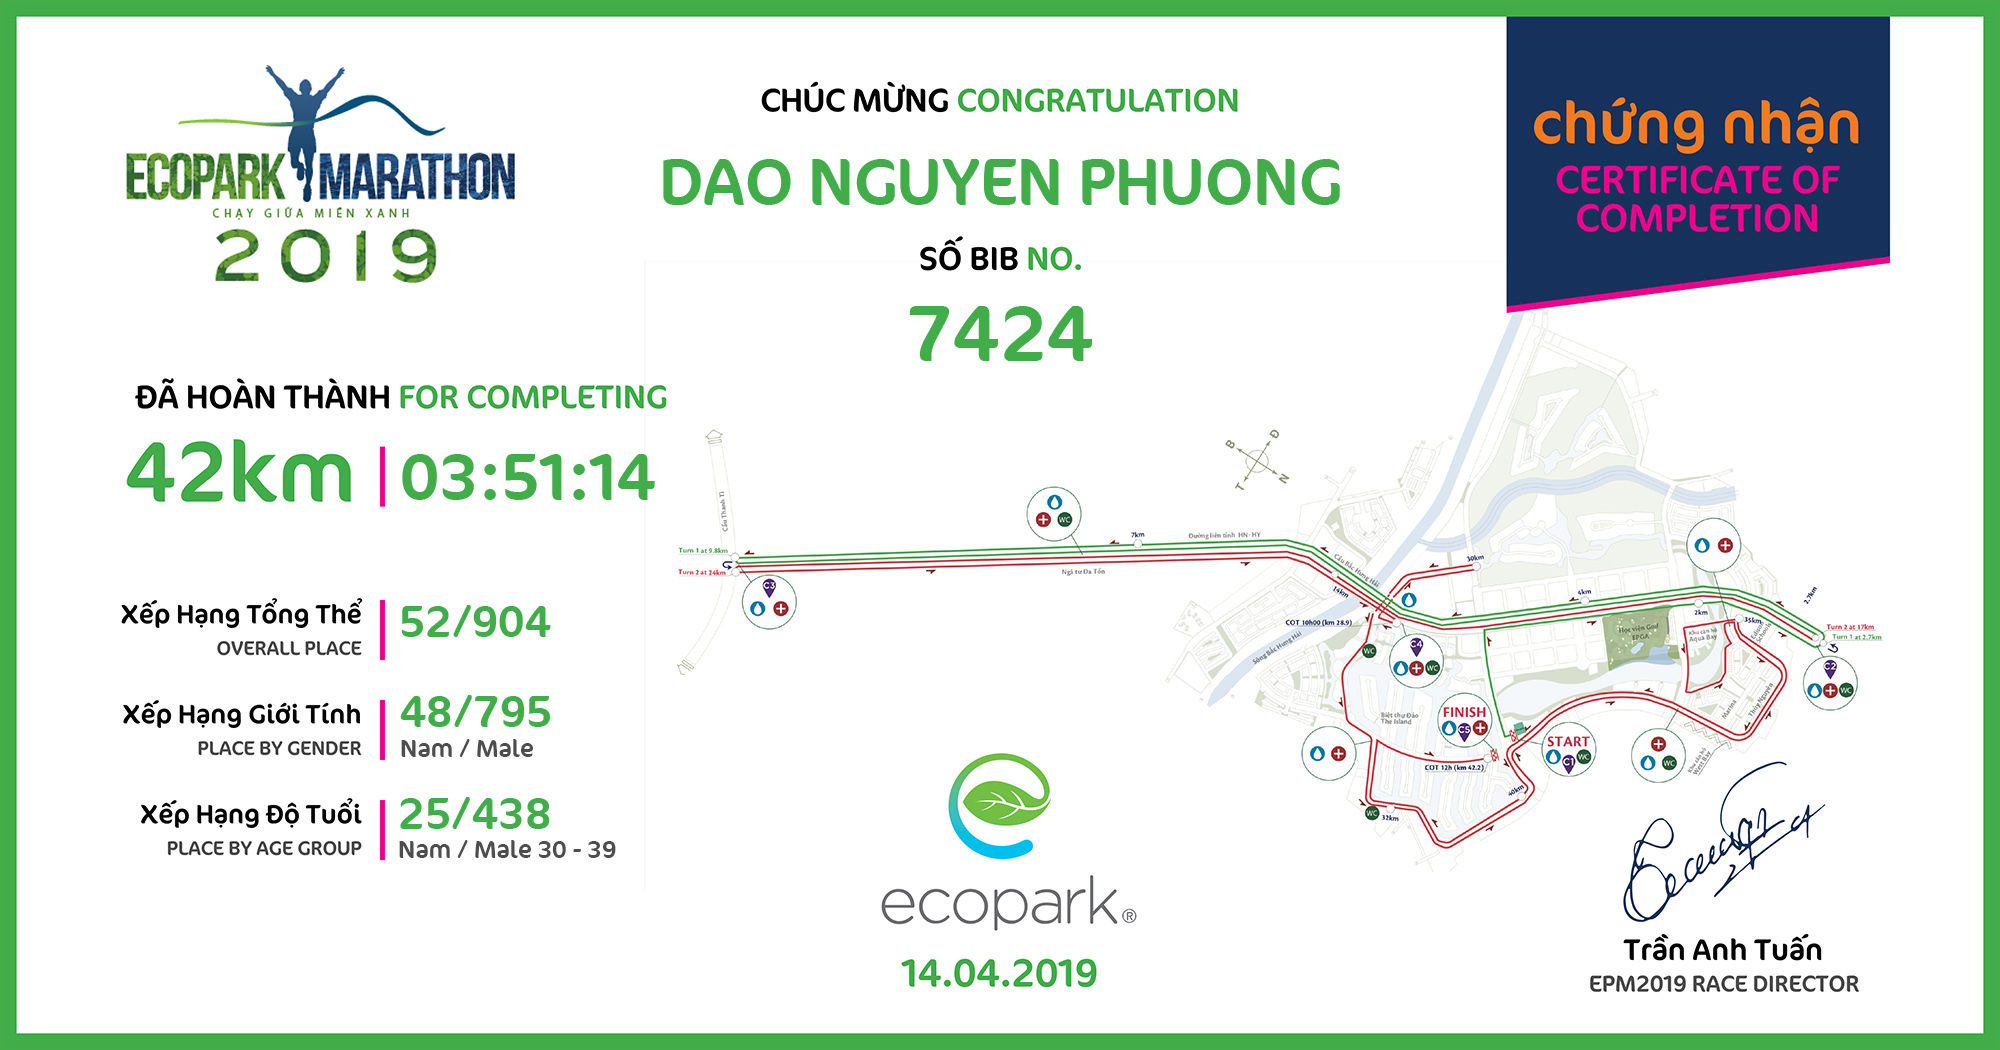 7424 - Dao Nguyen Phuong